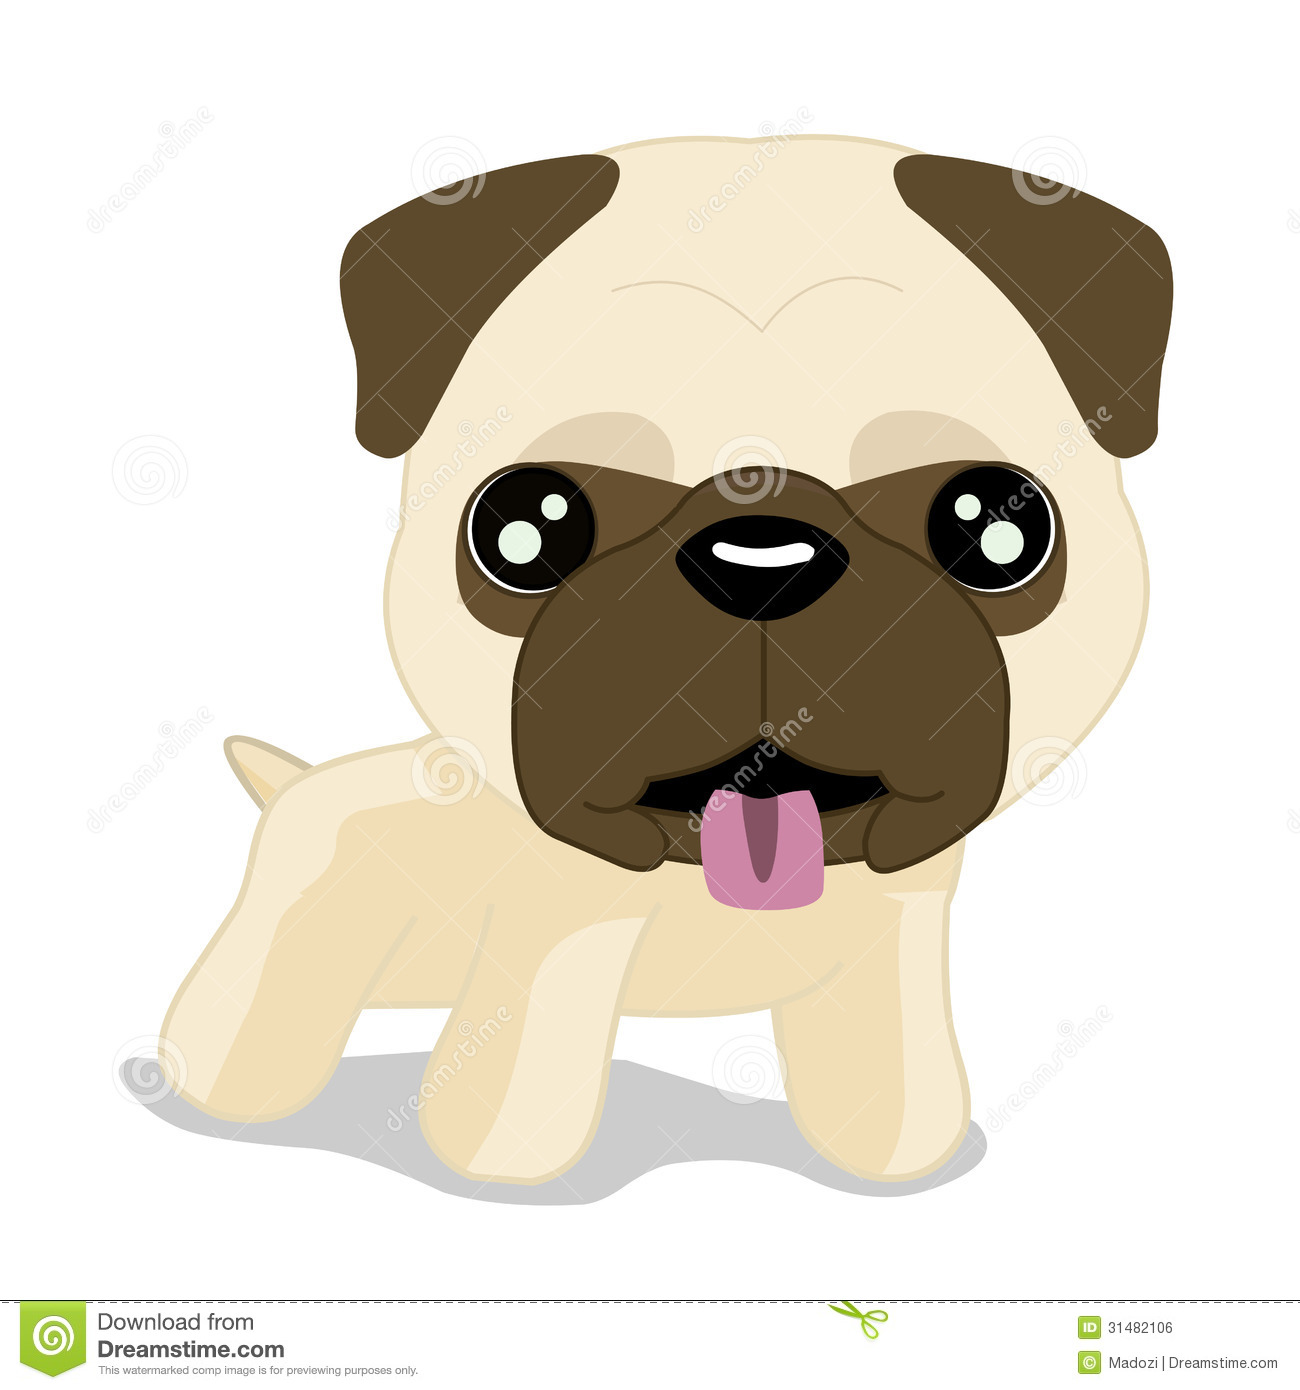 Cute Pug Puppy Dog Royalty Free Stock Image   Image  31482106